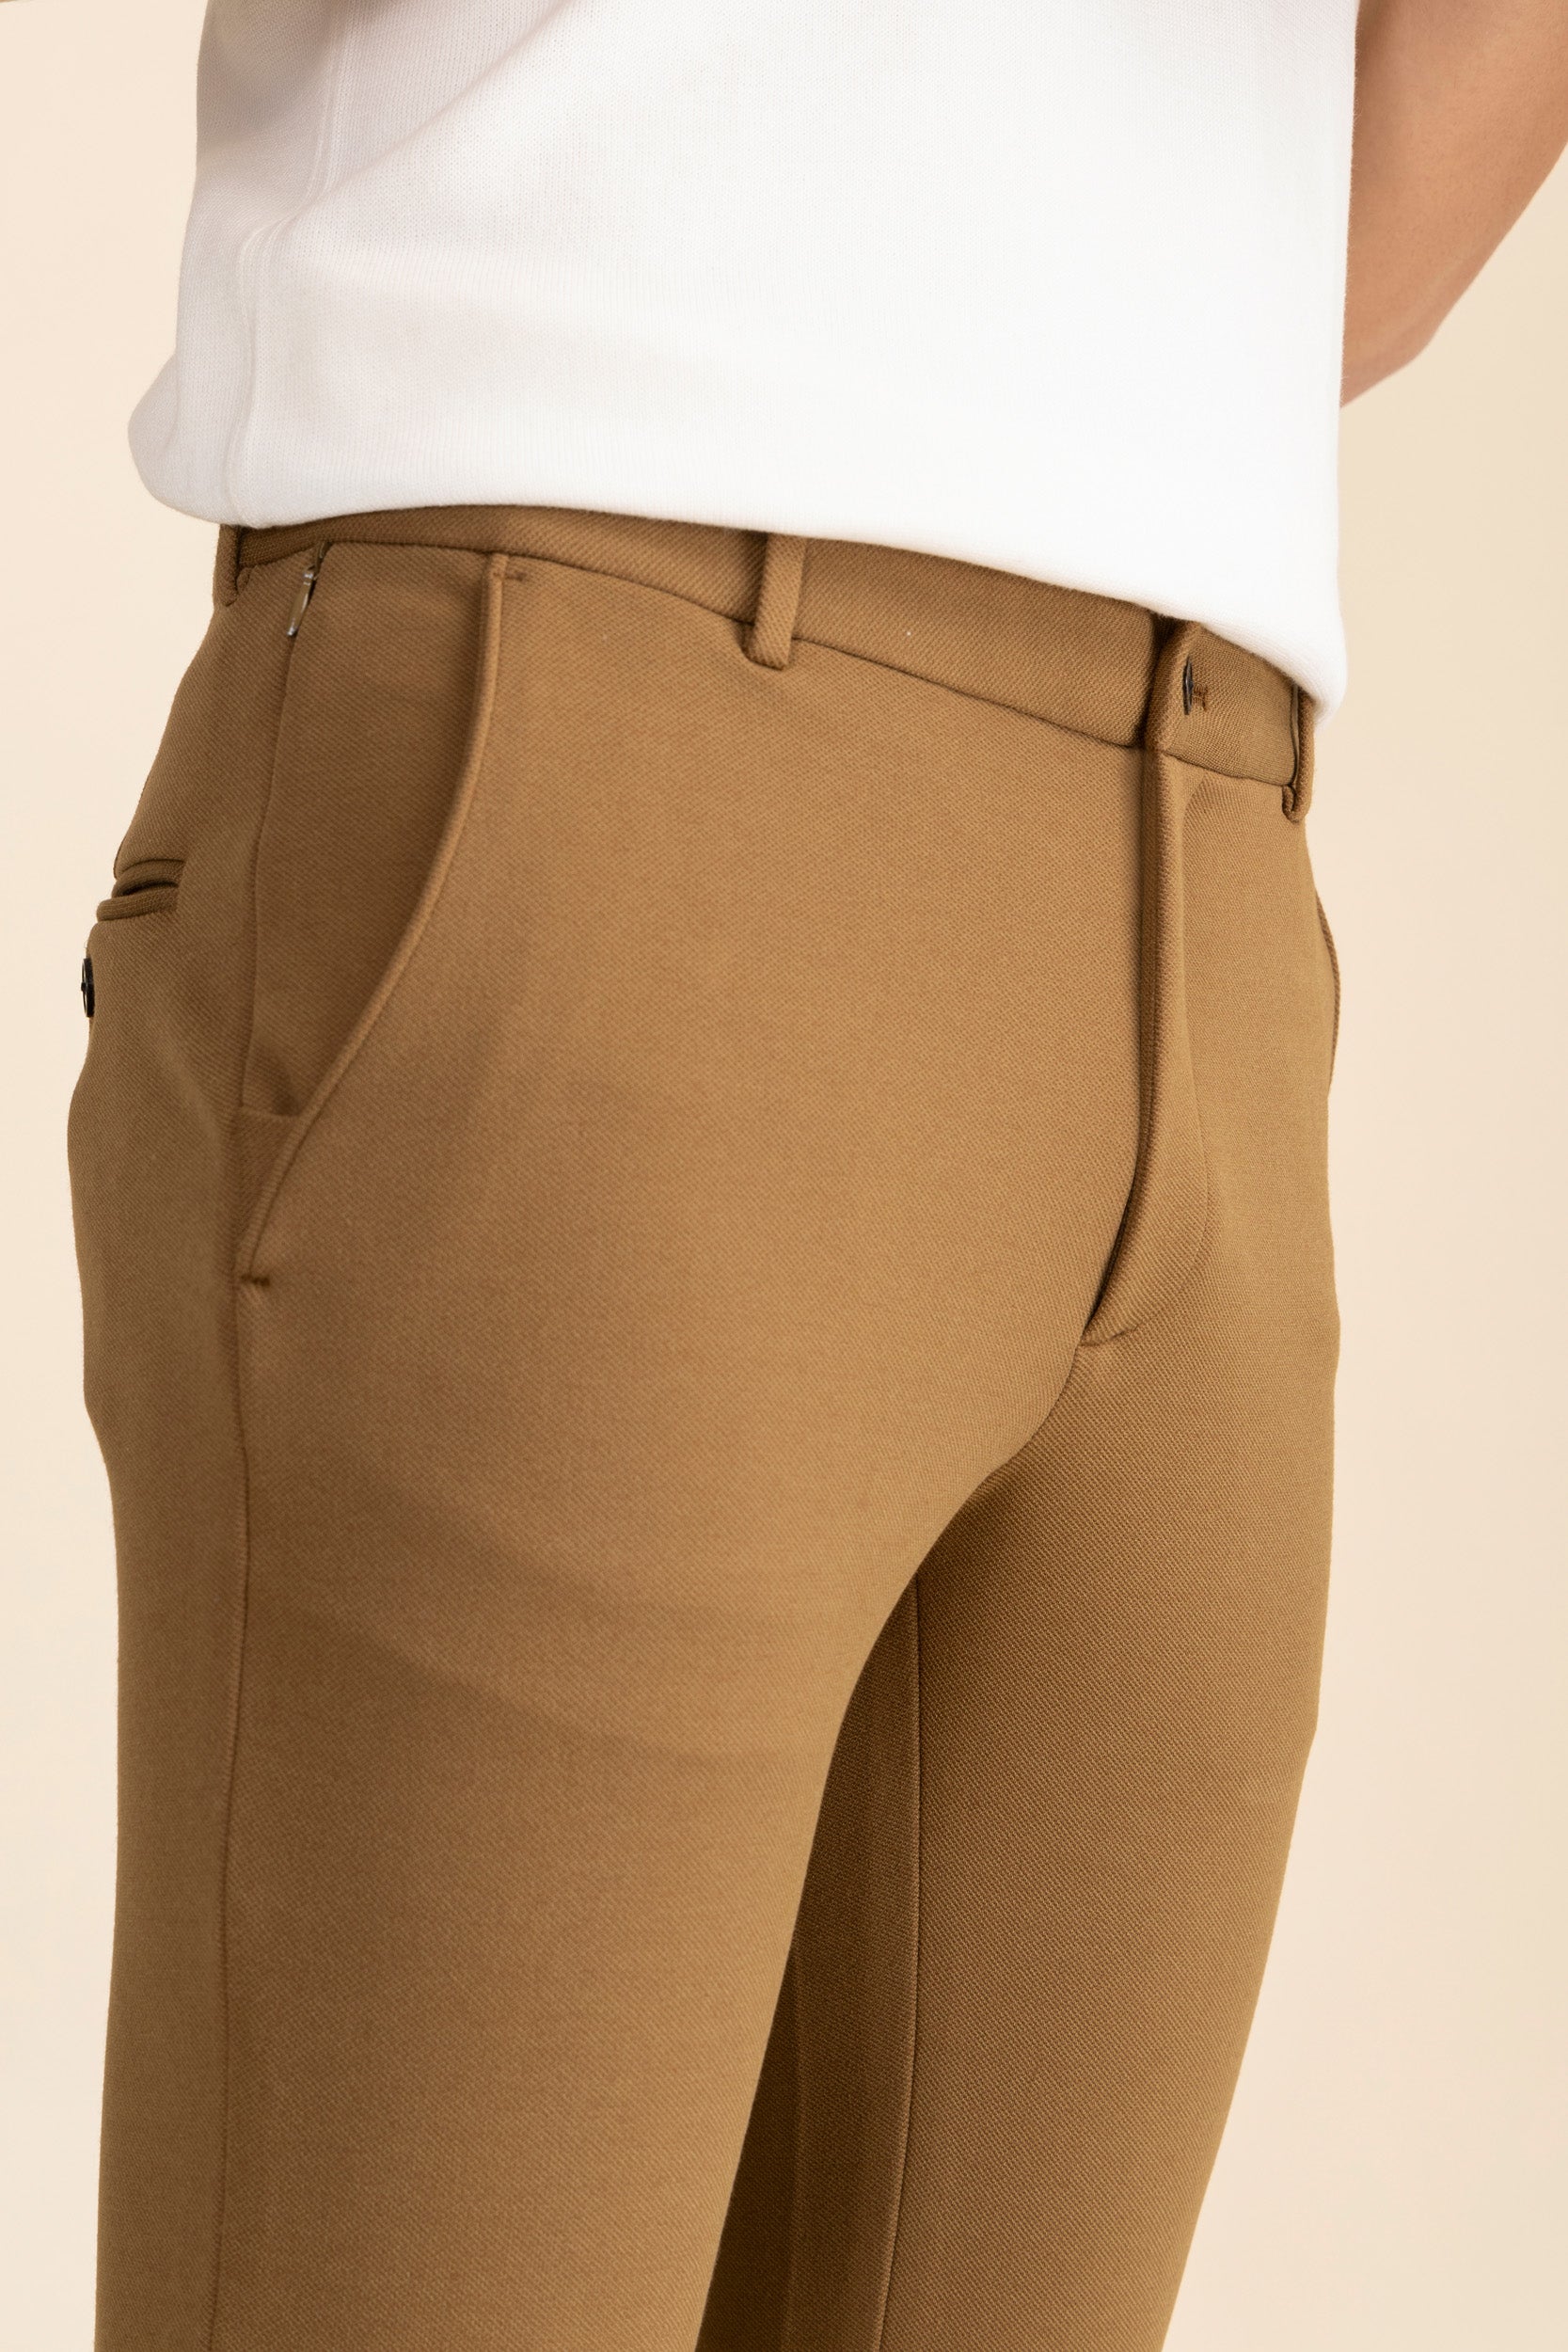 Brown Zipper Pants - 4 way Jet-Setter